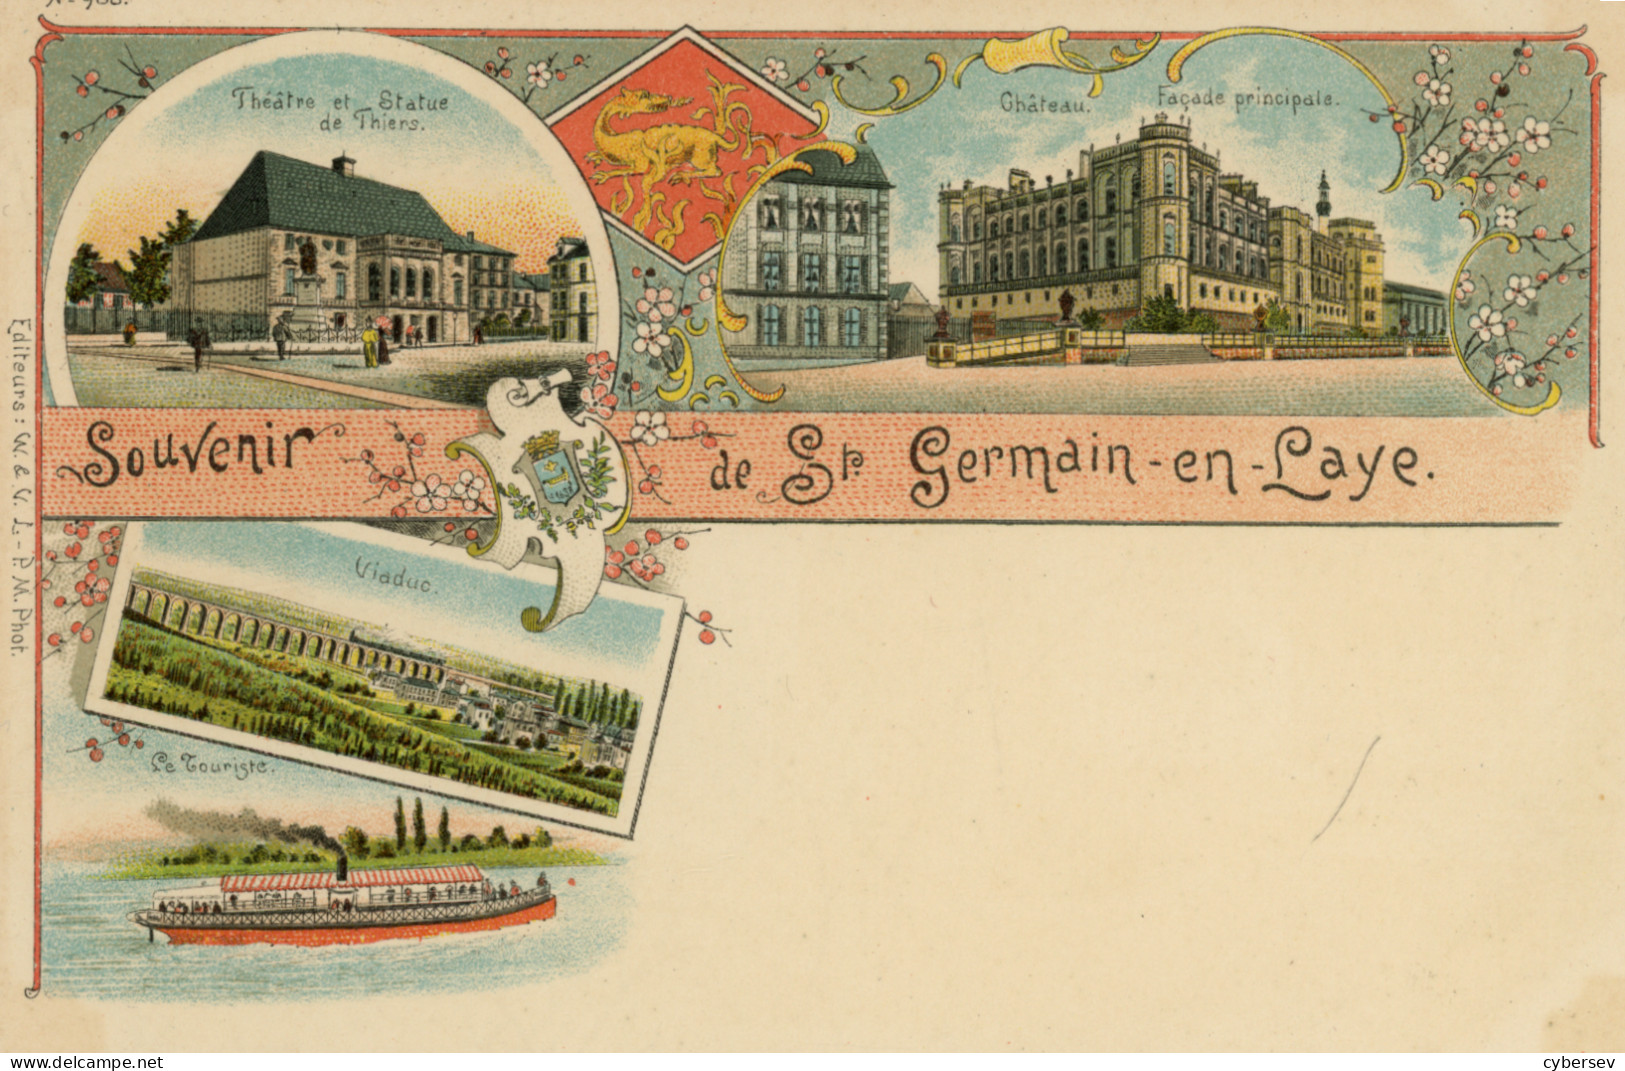 Souvenir De SAINT-GERMAIN-en-LAYE - St. Germain En Laye